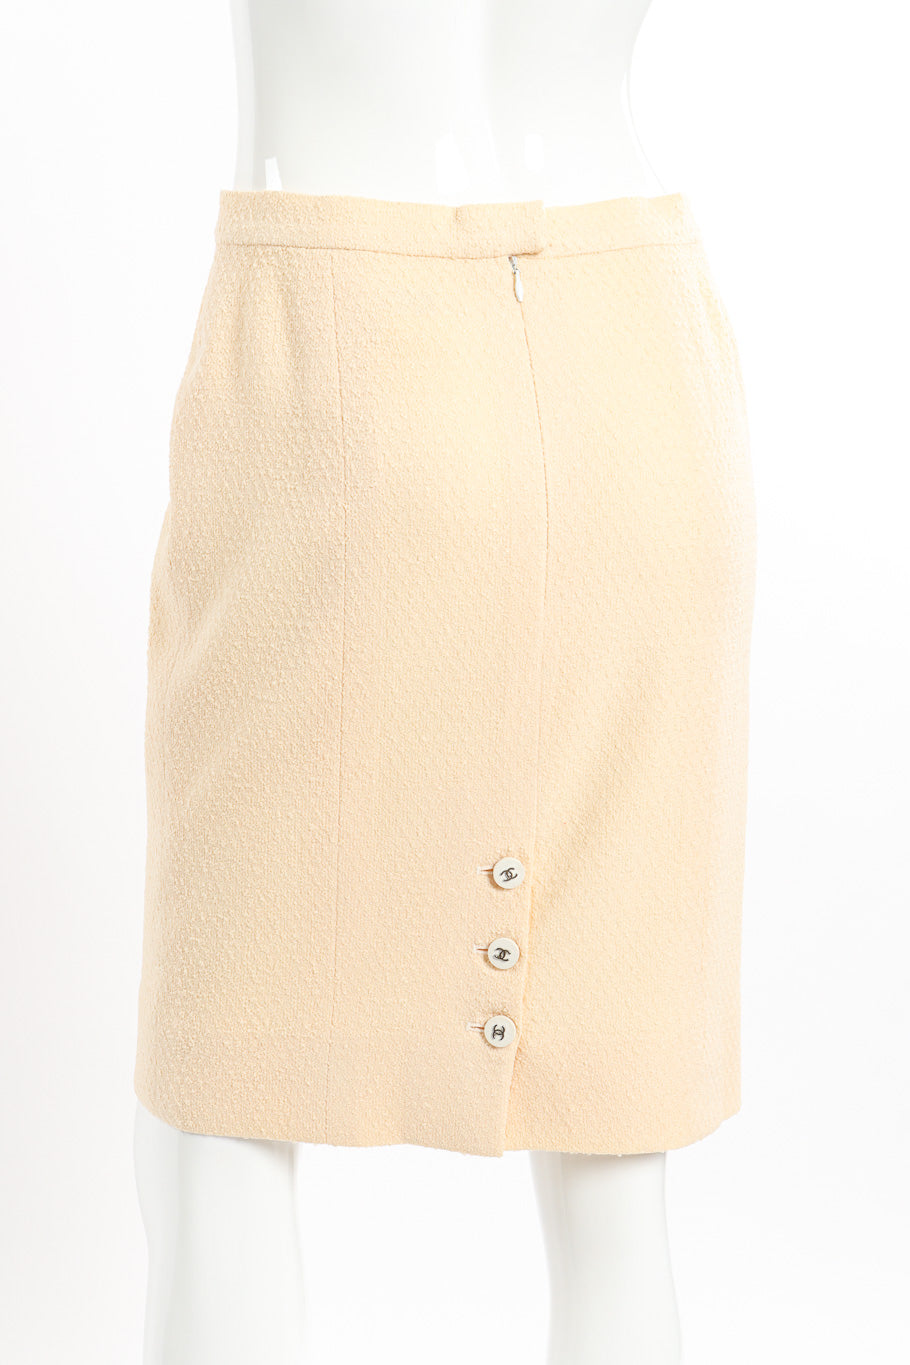 Chanel Knit Bouclé Jacket and Skirt Set skirt back on mannequin closeup @recessla